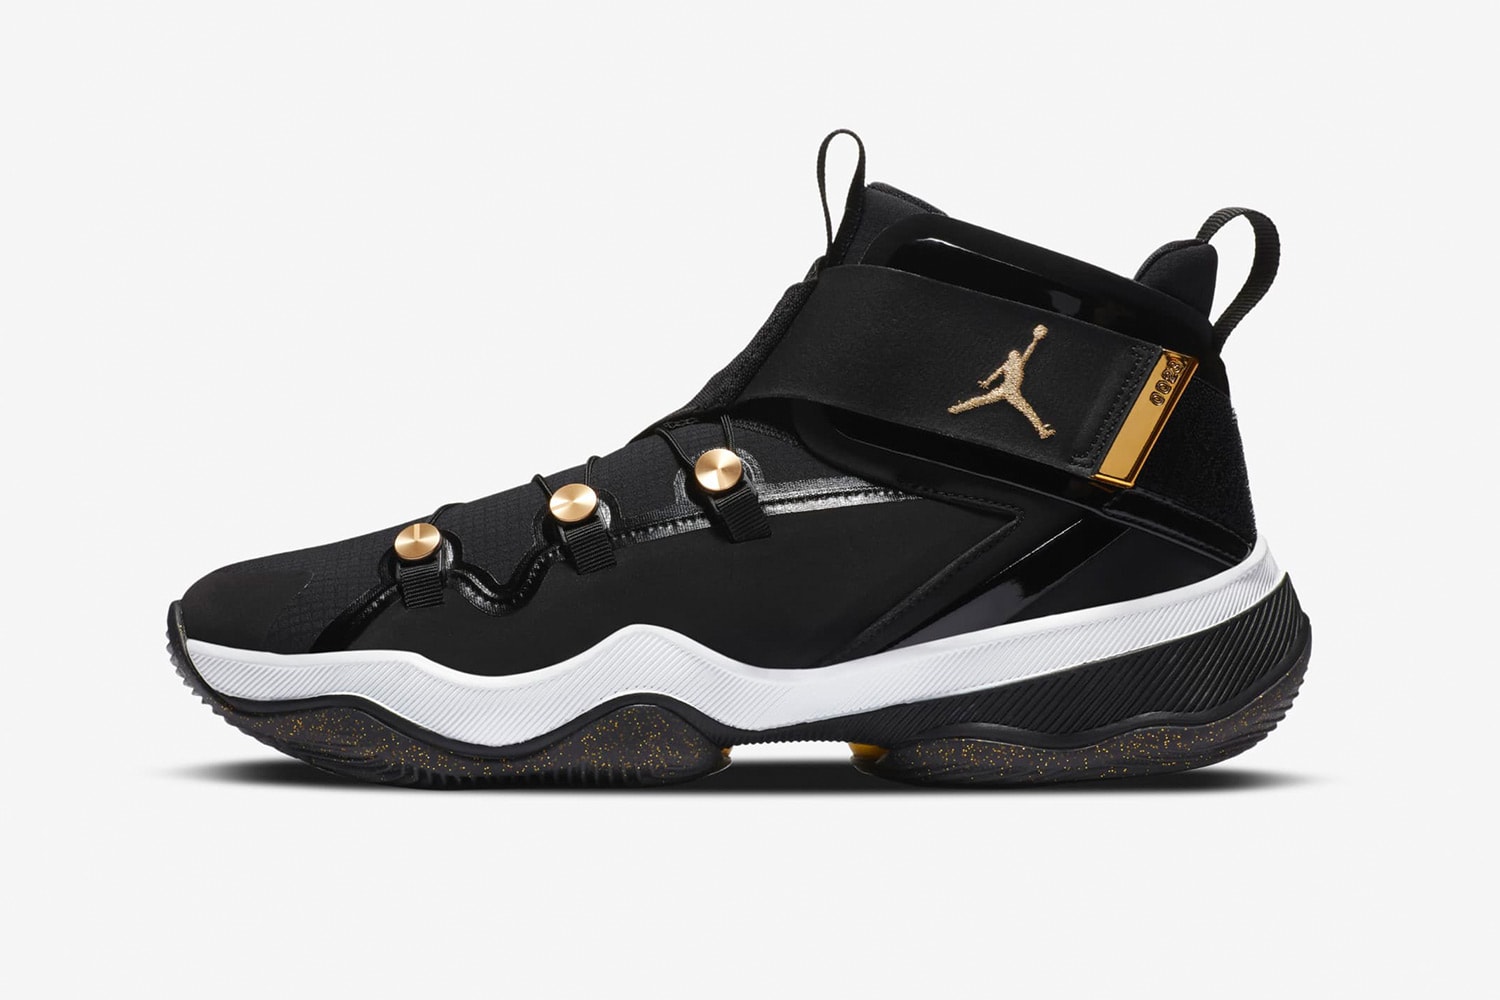 Jordan AJNT 23 "Black" Release Date Michael Jordan Jumpman Tinker Hatfield HYPEBEAST Footwear Sneakers Limited Edition Metallic Gold NBA Playoffs August